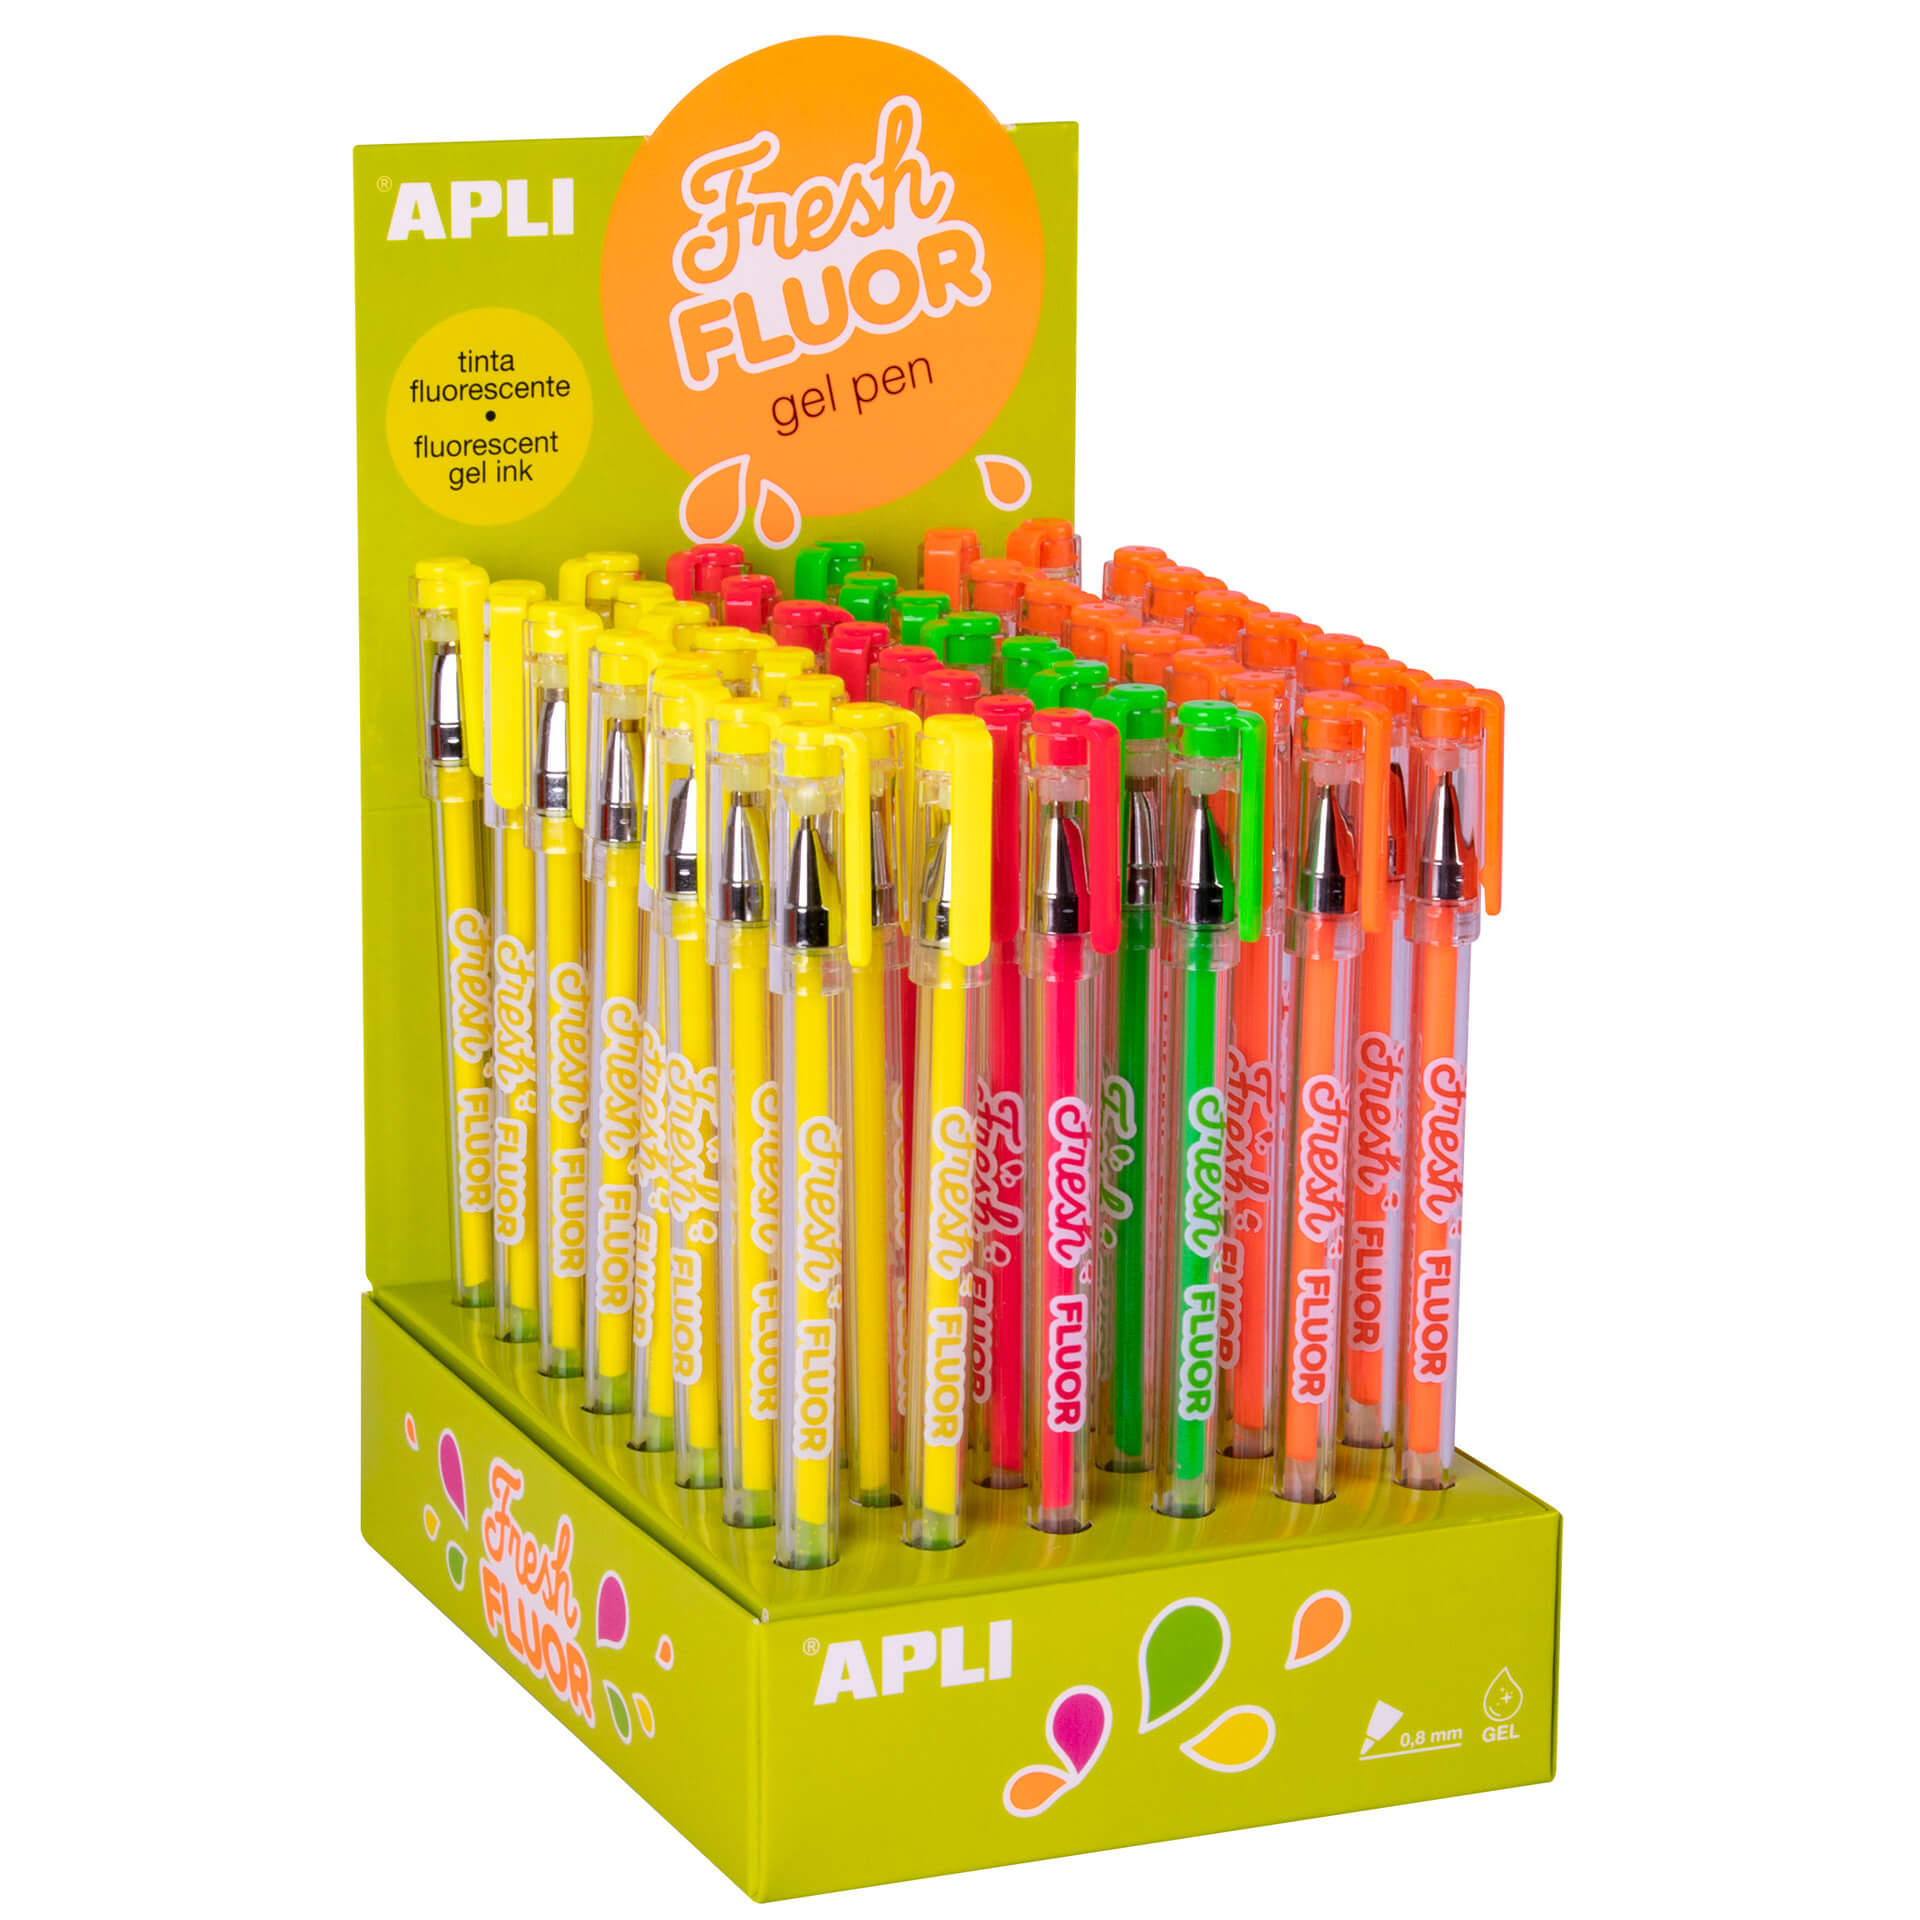 Apli Gel Pen Fresh Fluor - 48 Boligrafos de Tinta Gel Fluorescente - Secado Rapido y Larga Duracion - Grueso de Escritura de 1mm